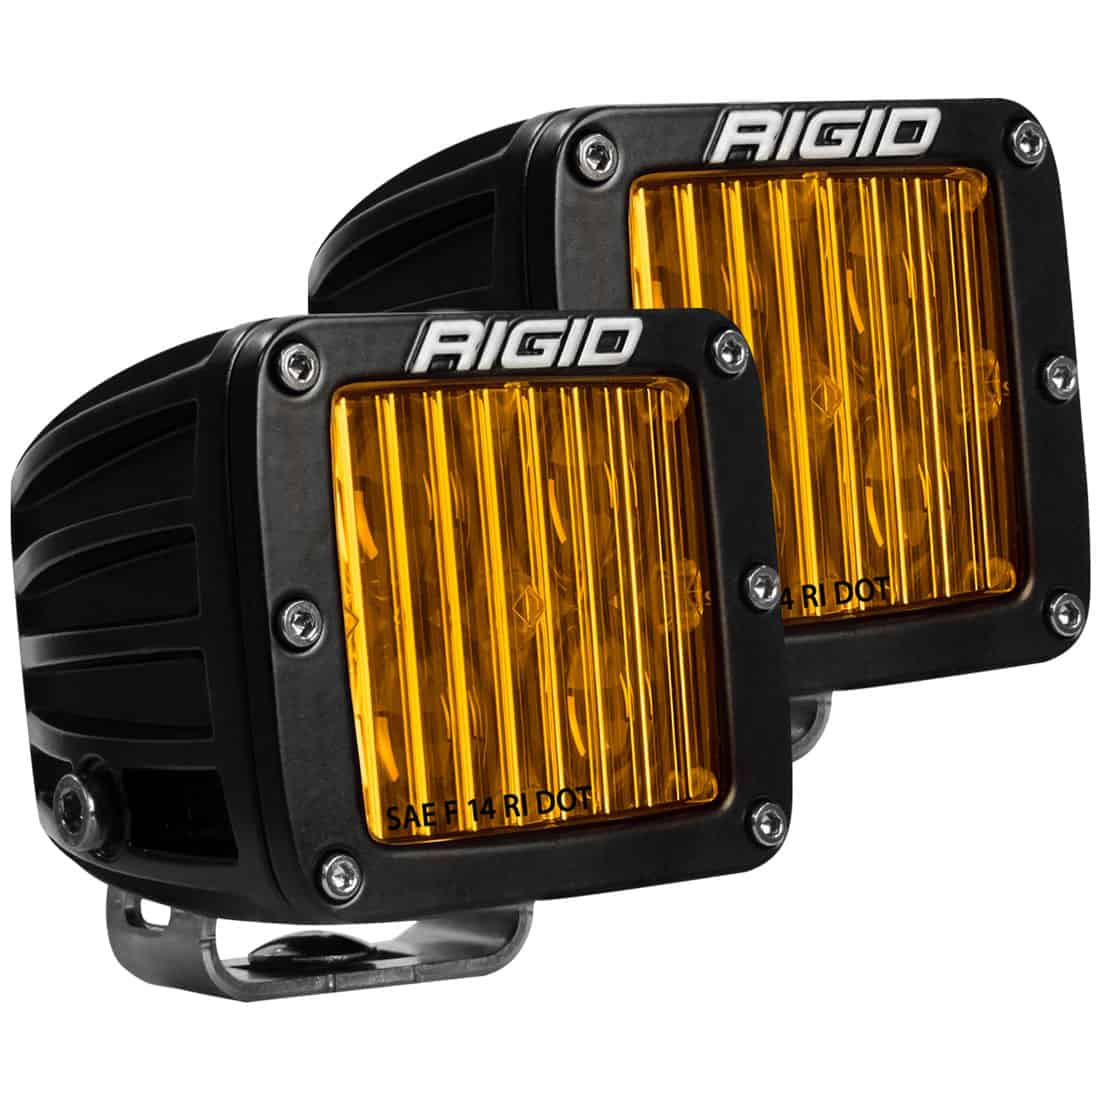 SAE J583 Compliant Selective Yellow Fog Light Pair D-Series Pro Street Legal Surface Mount RIGID Lighting 504814